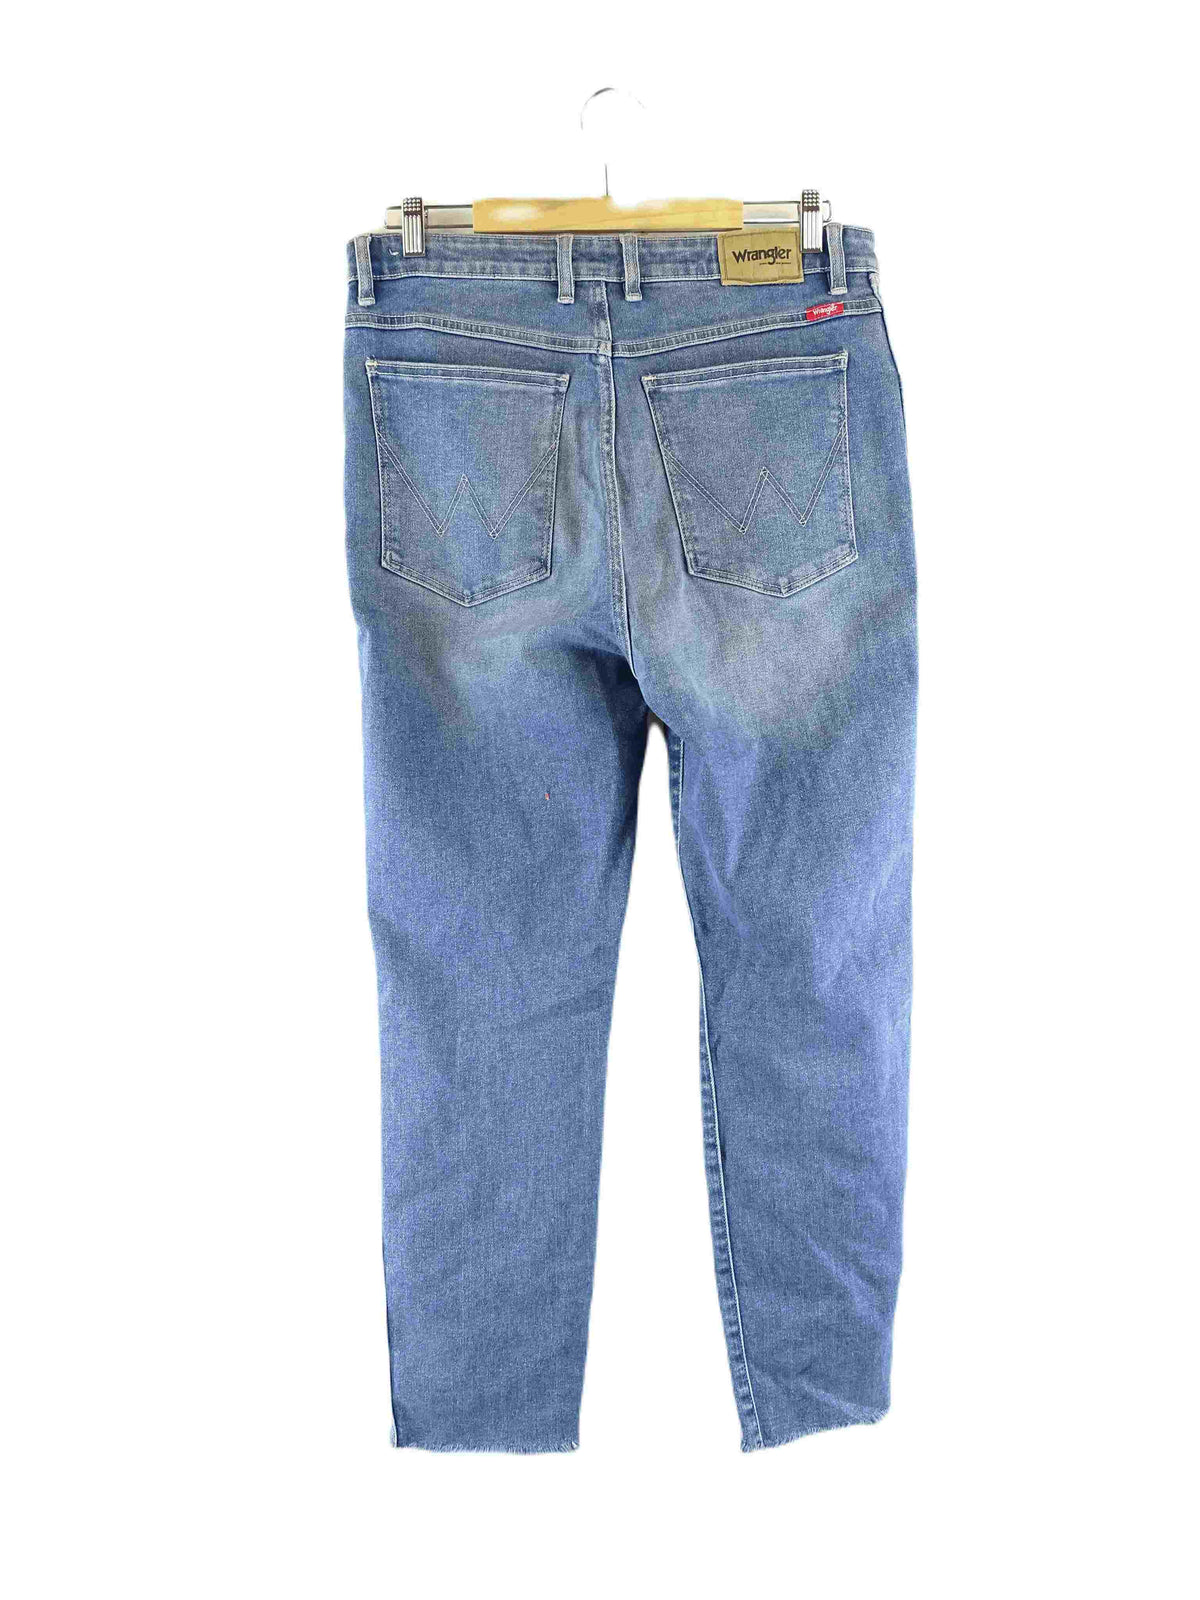 Wrangler Blue Denim Jeans AU 14 / 32